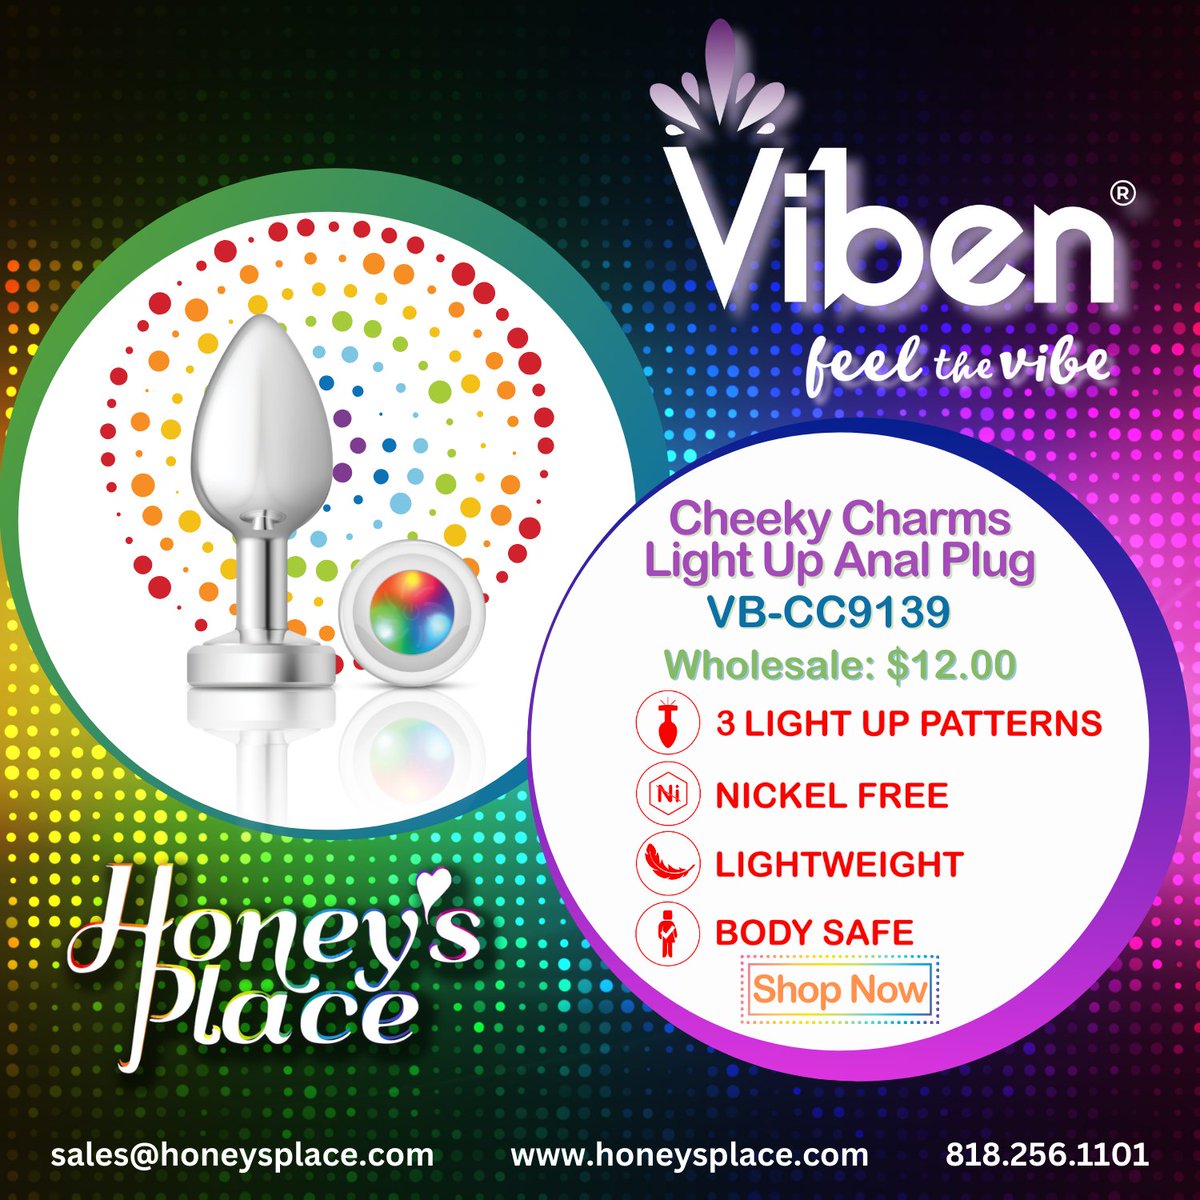 Cheeky Charms Light Up Anal Plug. bit.ly/3V2UC2m #HoneysPlace #VibenToys #LightUpYourLife